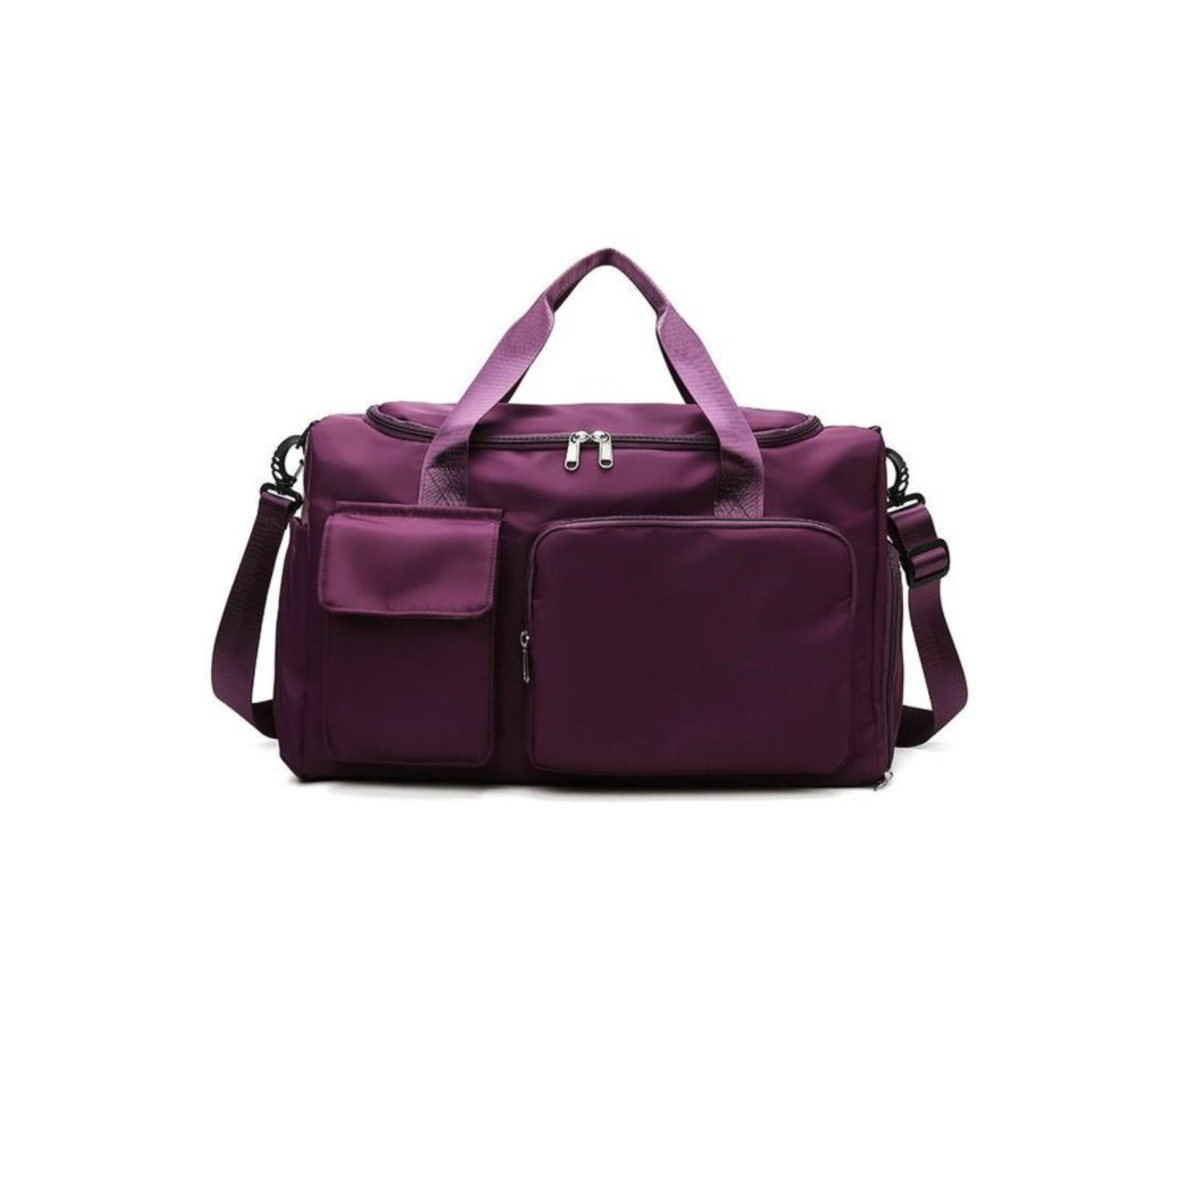 Waterproof Duffel Bag with Multiple Pockets & Handles | Shop Today. Get ...